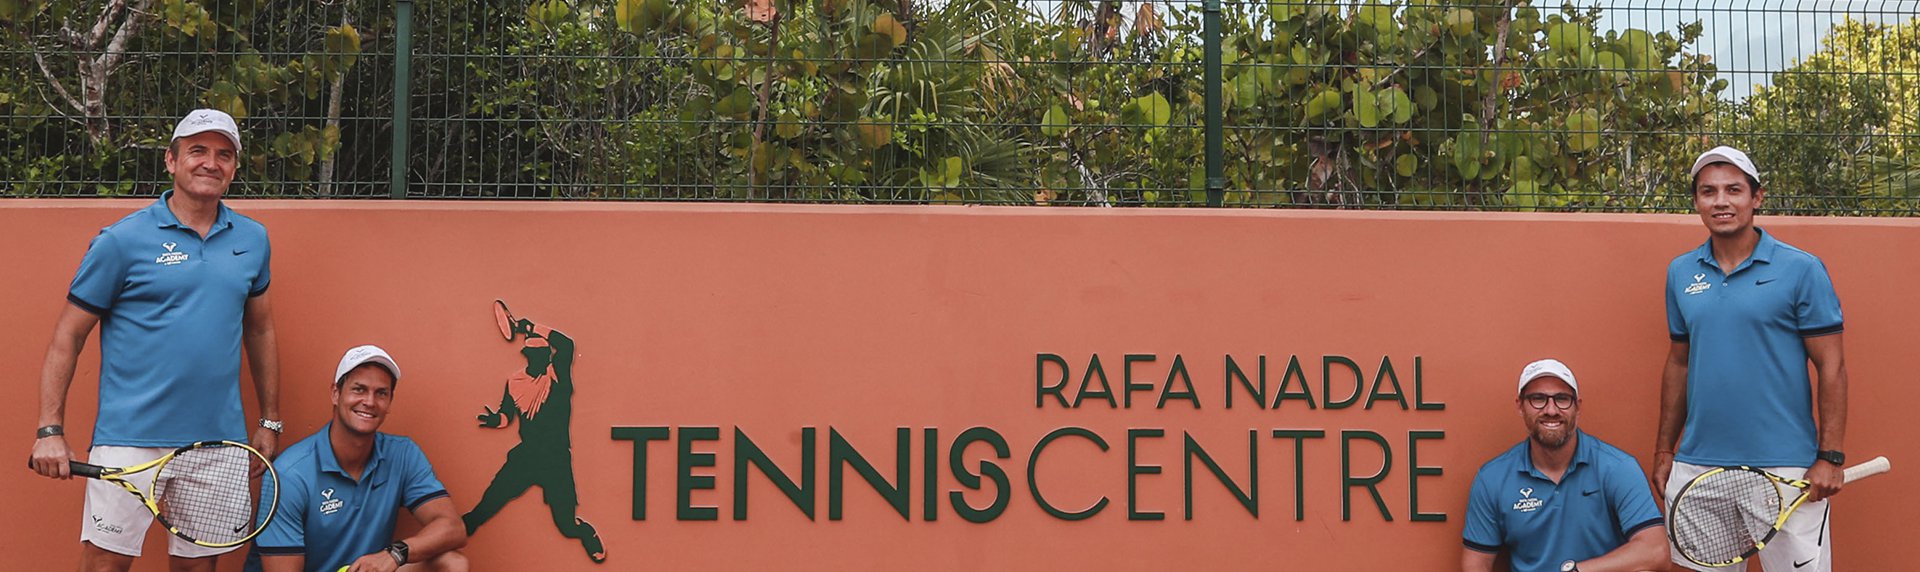 About us Rafa Nadal Tennis Centre